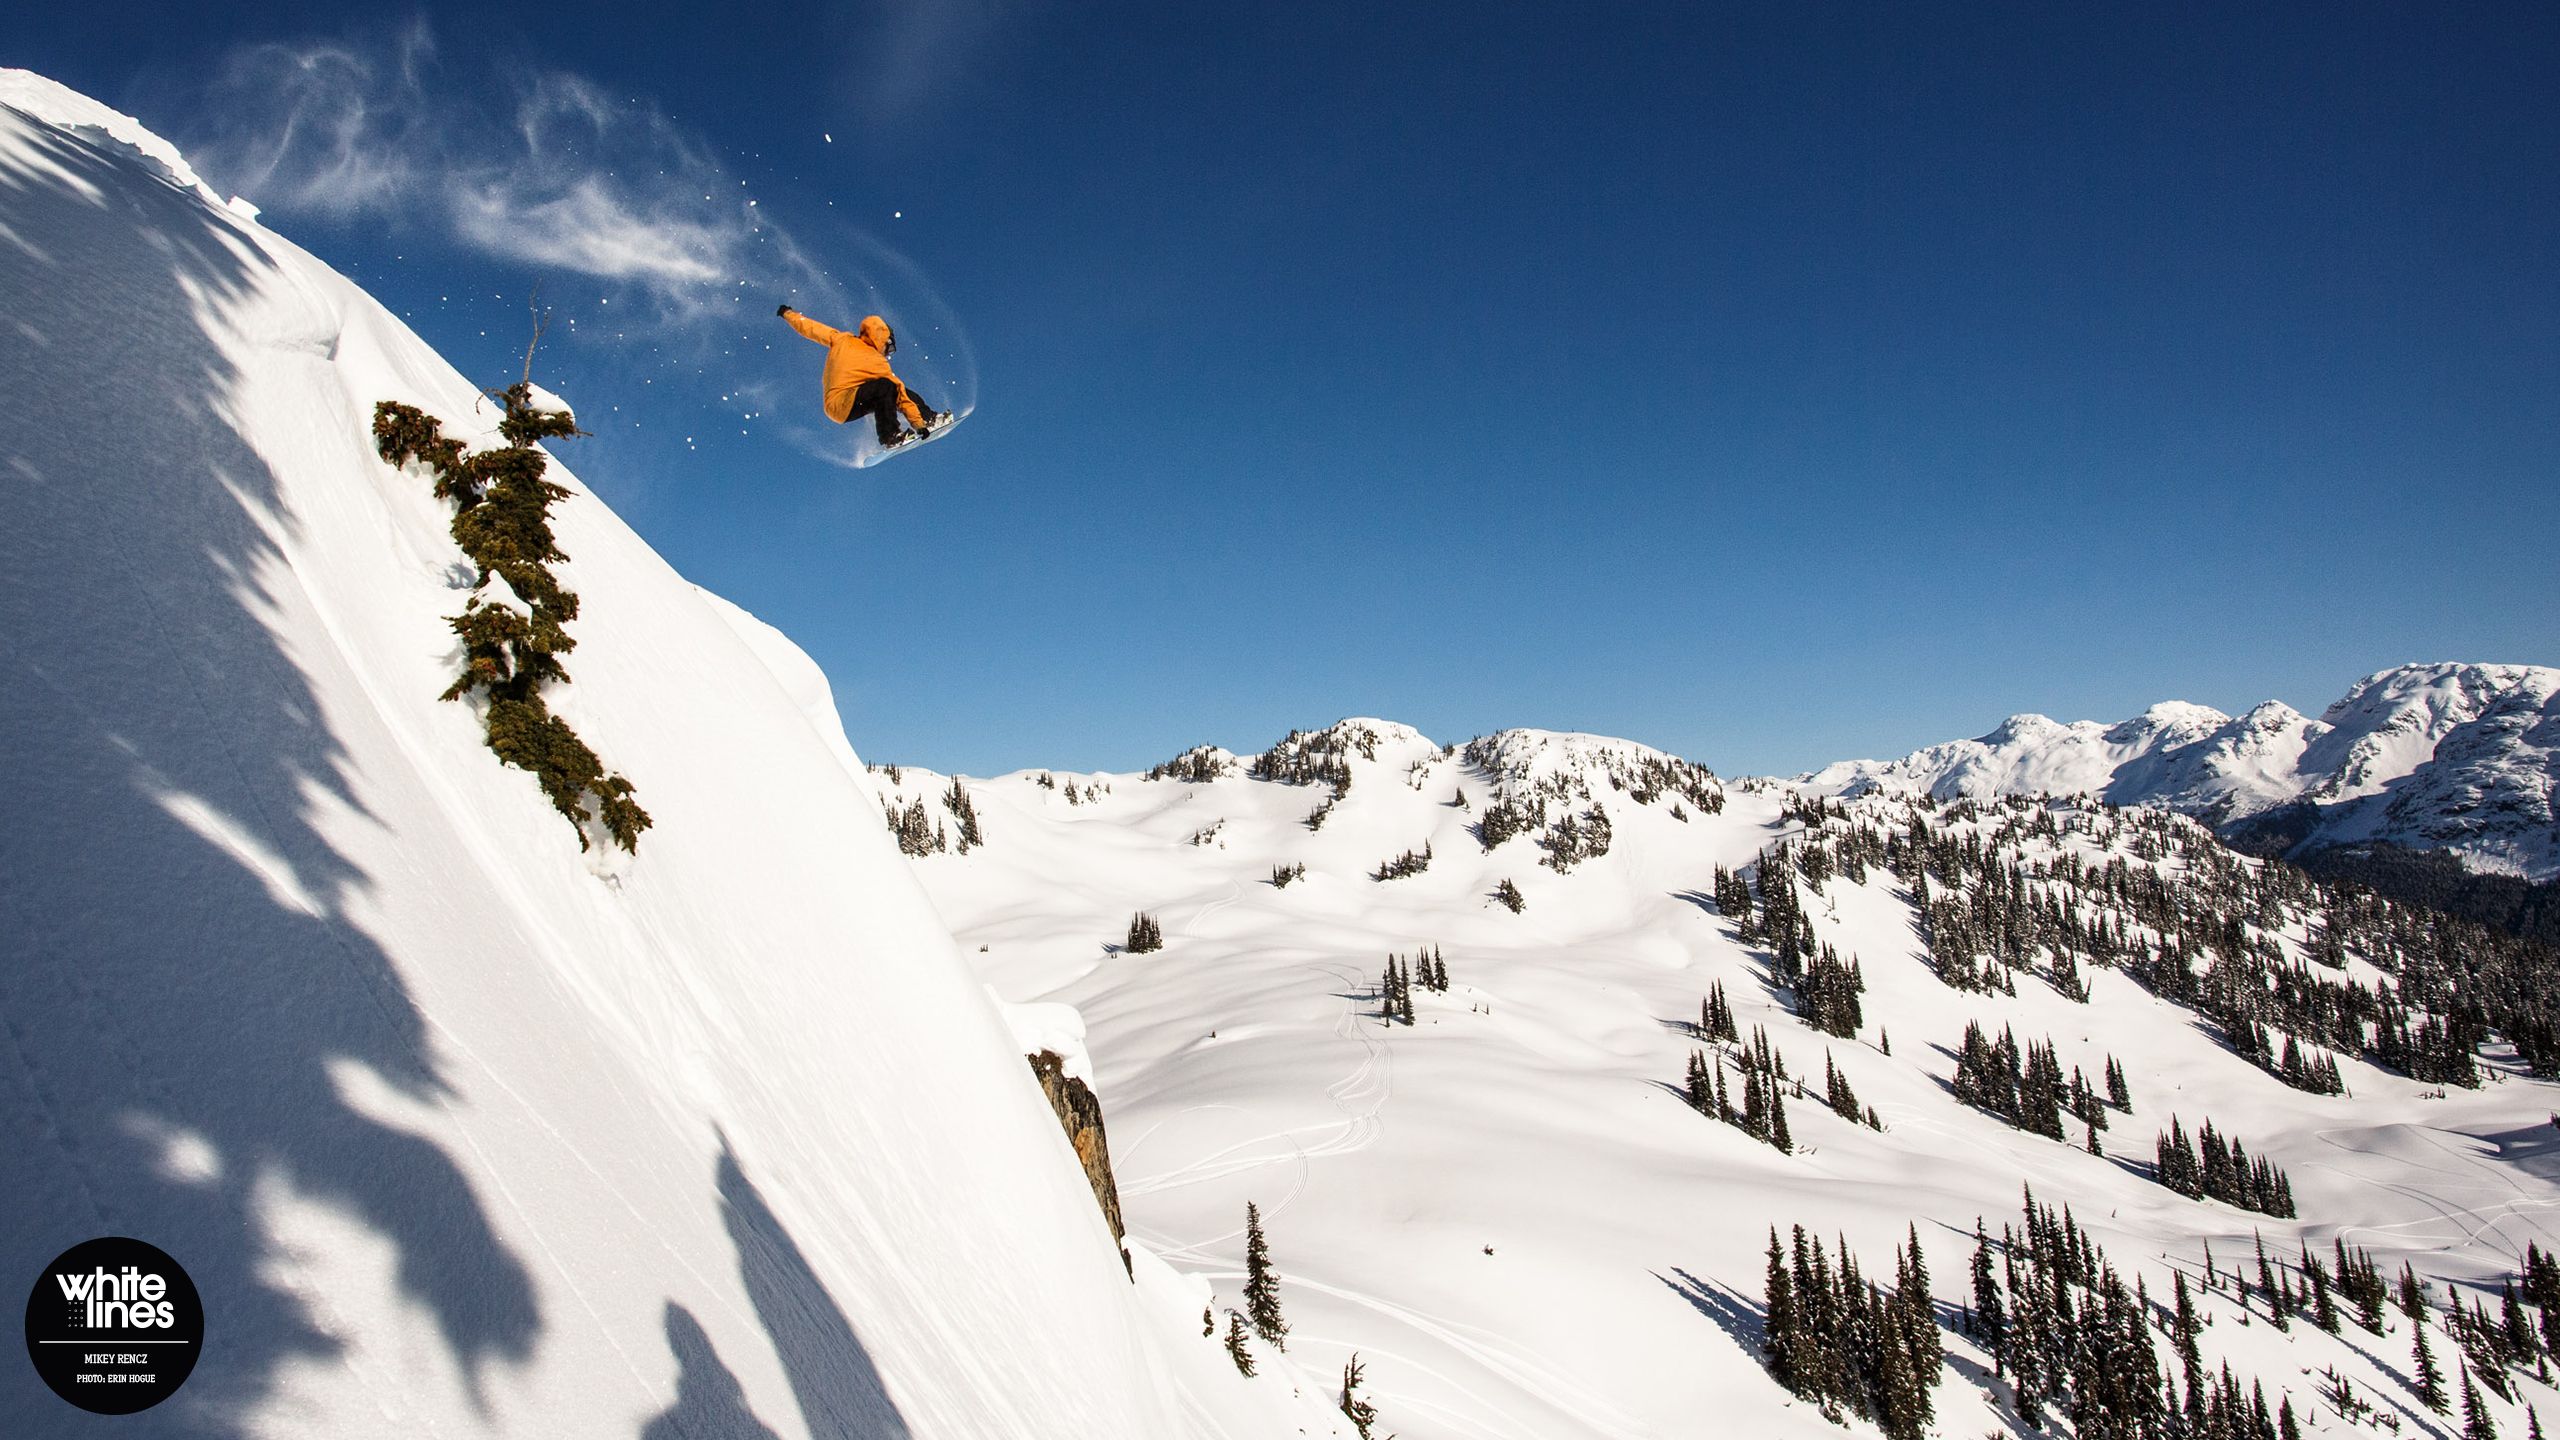 Snowboard Wallpaper Rencz's Leap of Fa